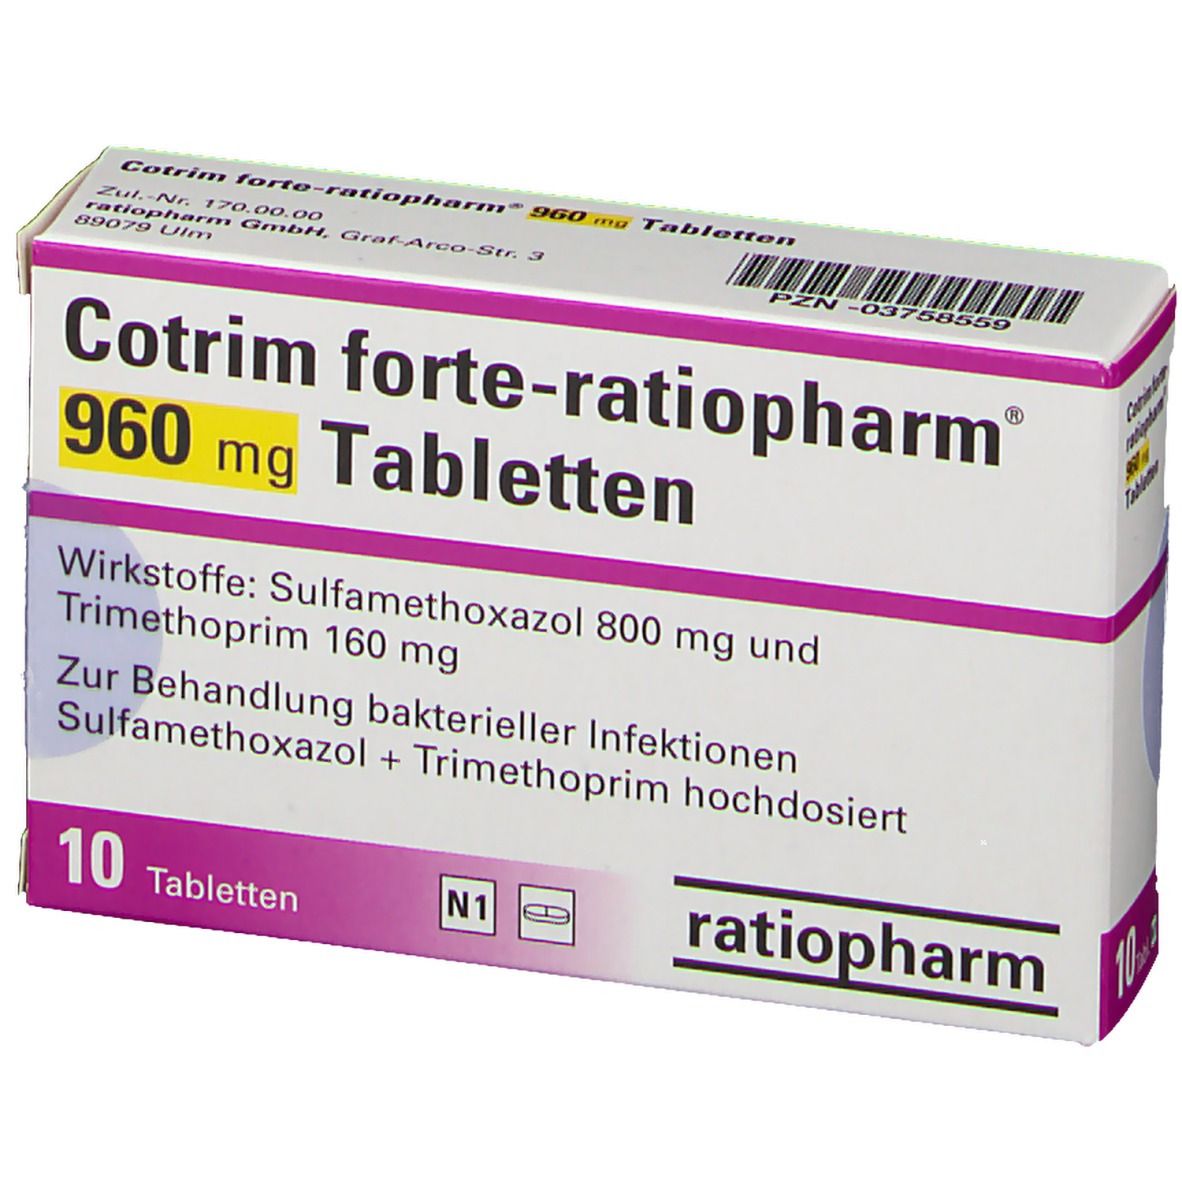 Cotrim forte-ratiopharm® 960 mg